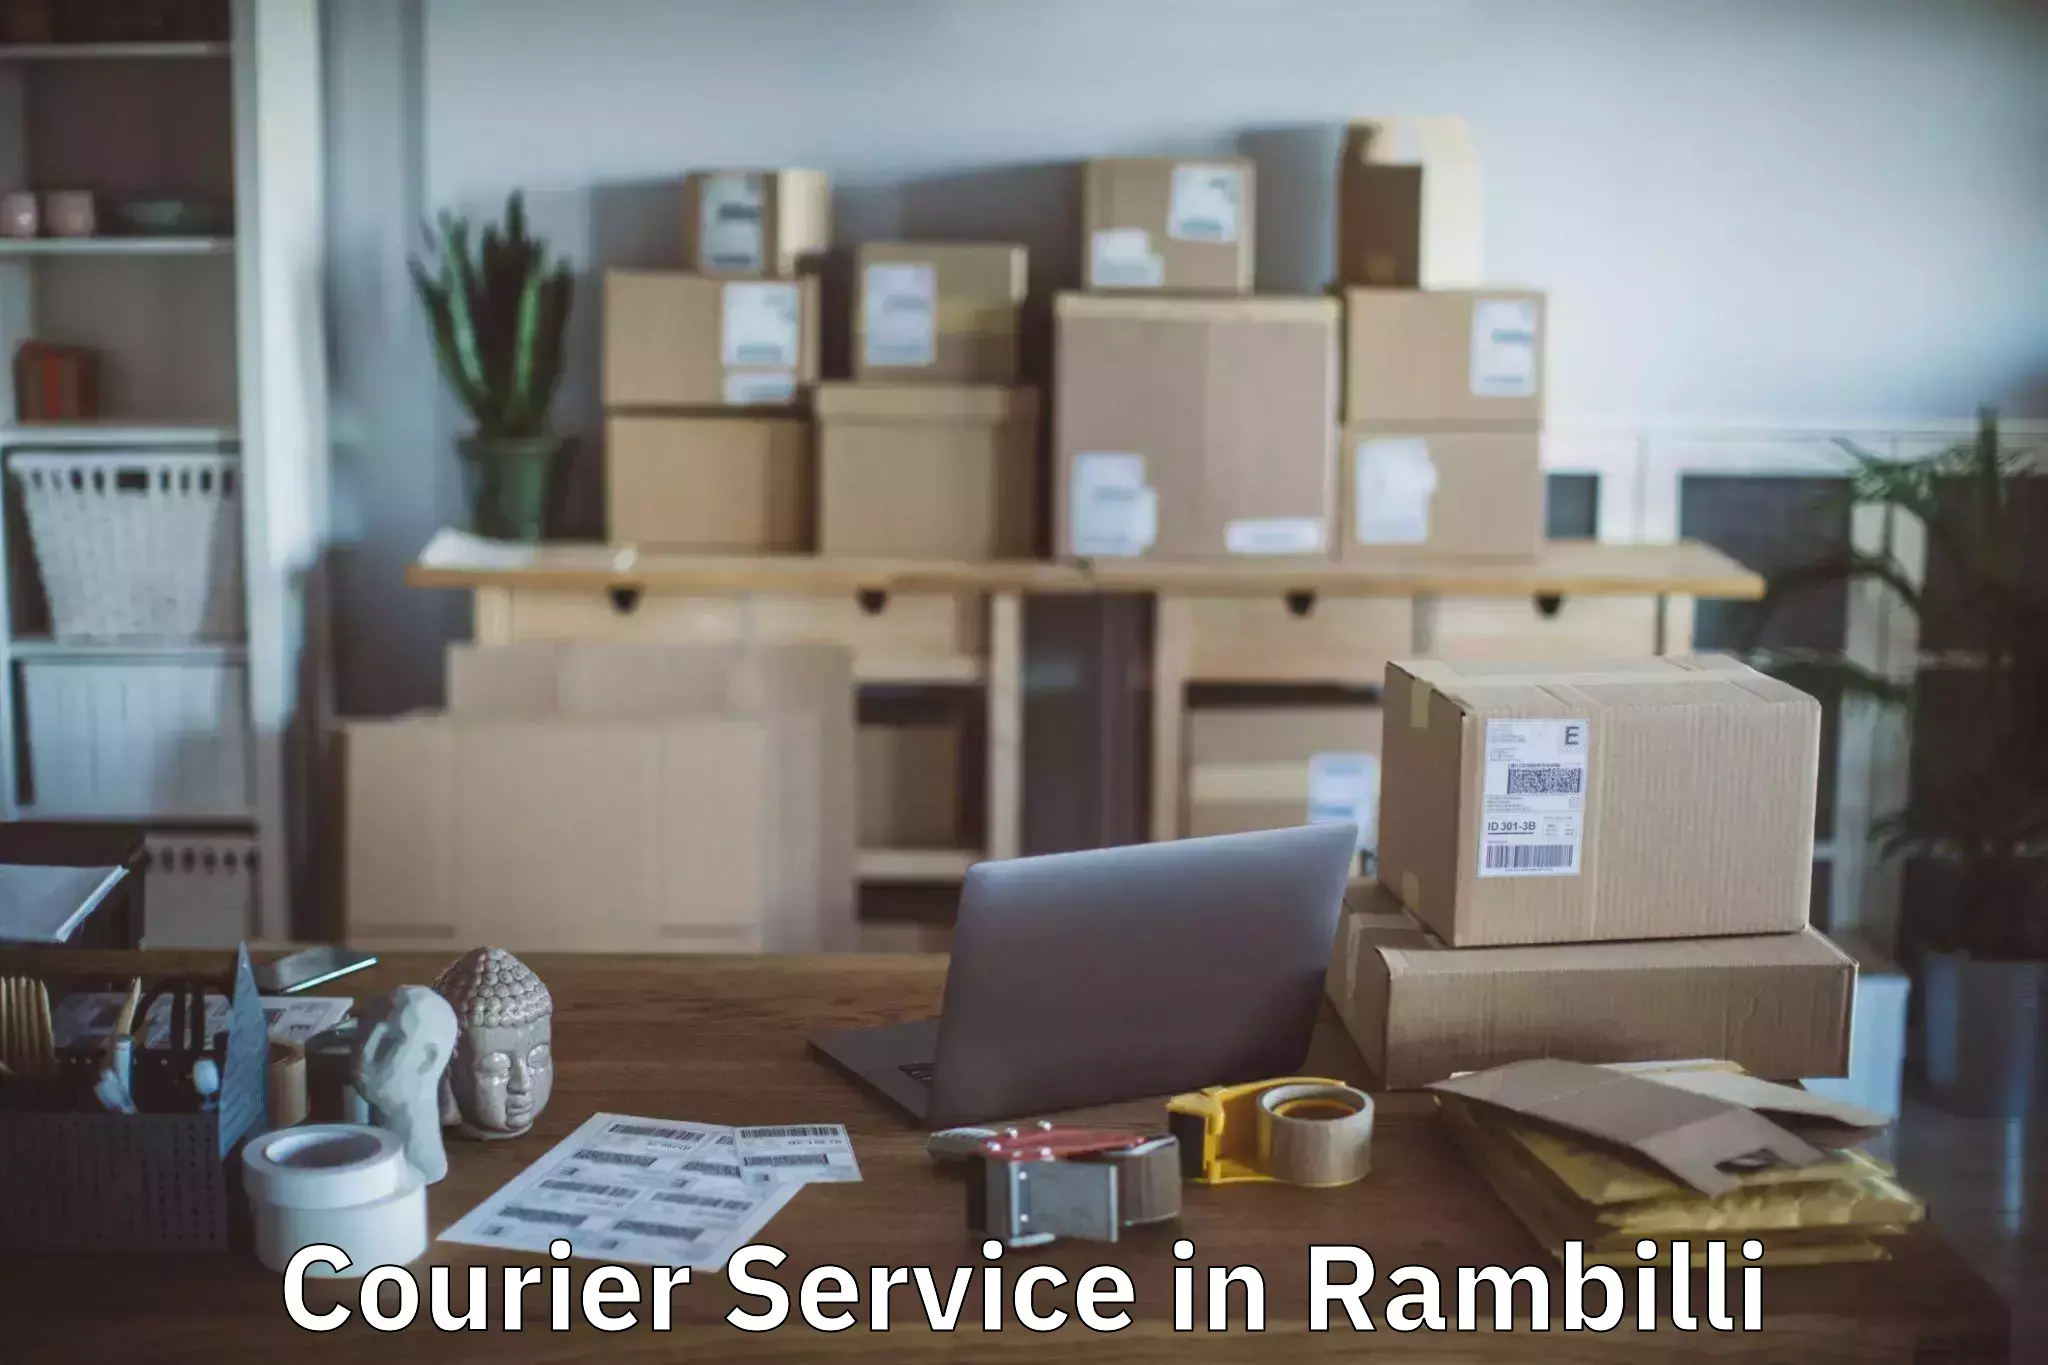 Quick dispatch service in Rambilli